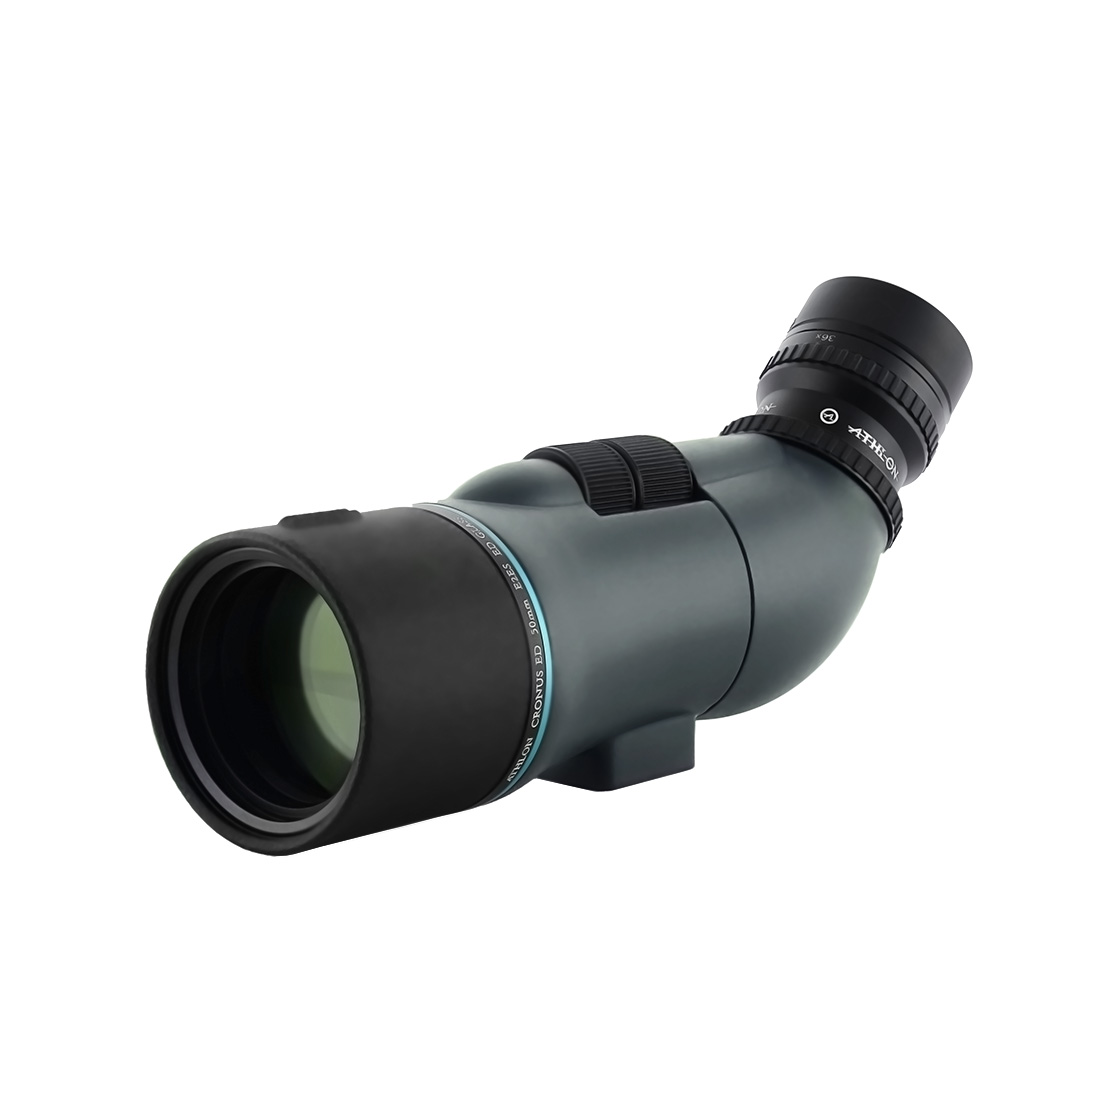 AthlonCronusED-12-36x50-Spotting-scope-angle-view.jpg